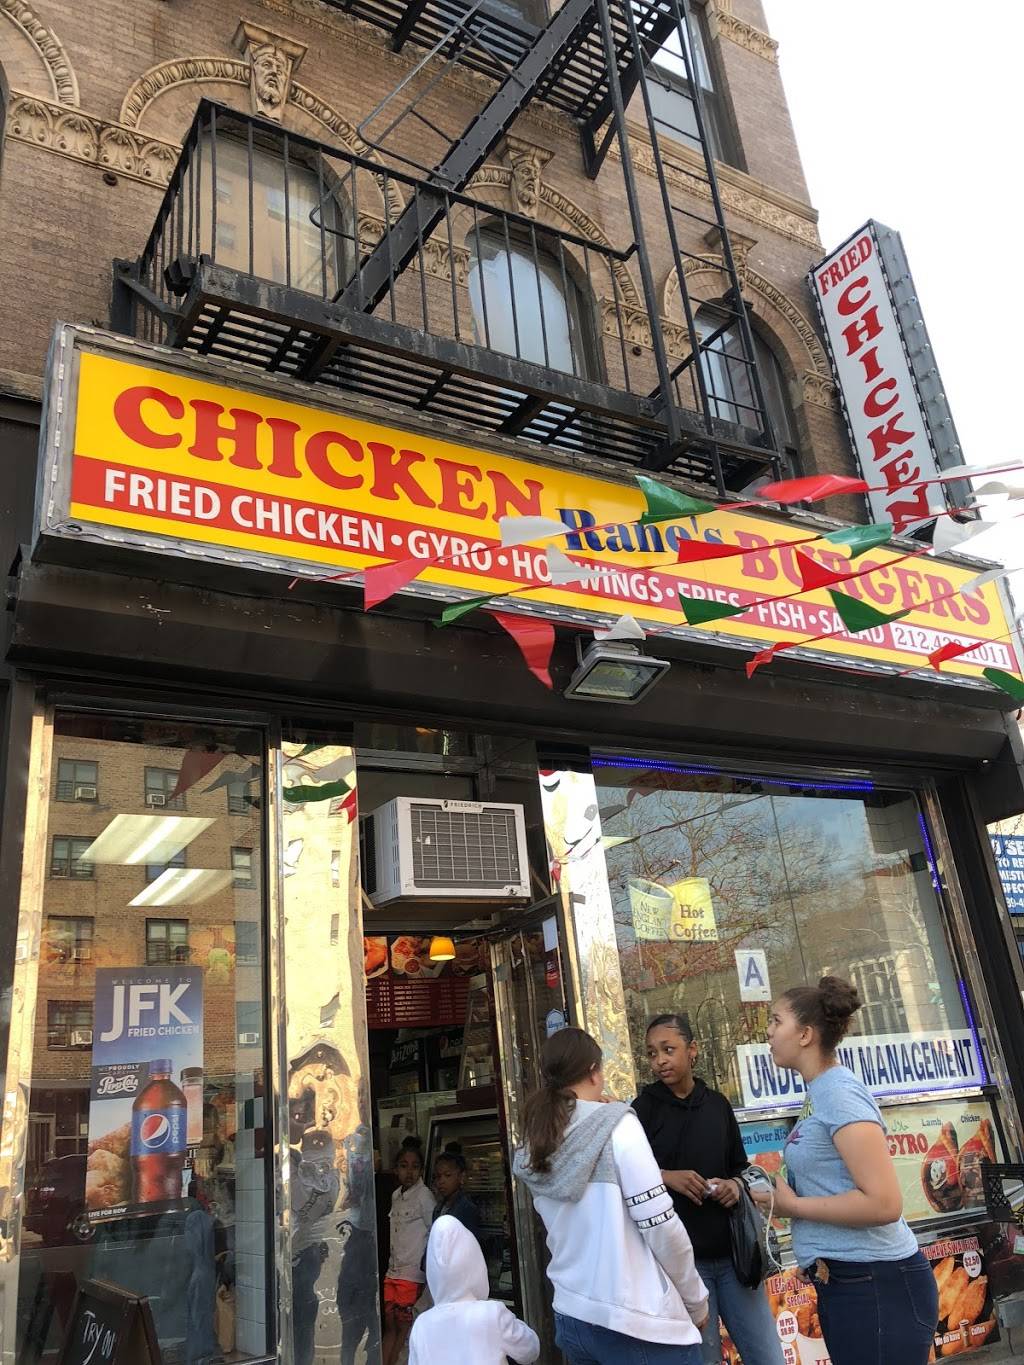 JFK Fried Chicken | restaurant | 2041 1st Avenue, New York, NY 10029, USA | 2124231011 OR +1 212-423-1011